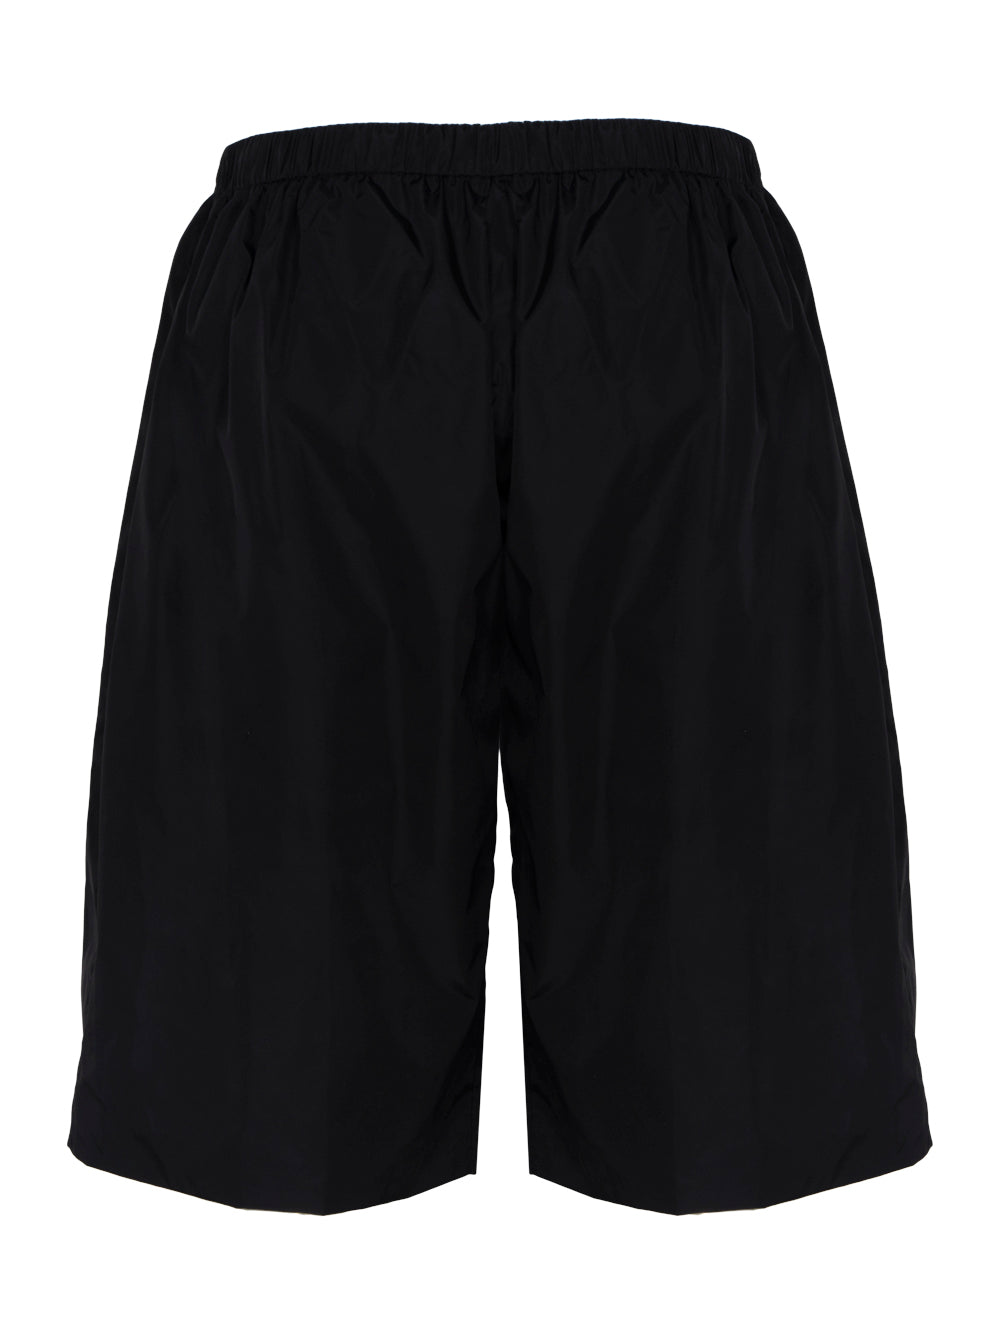 Pull On Shorts W/ Drawstring Black